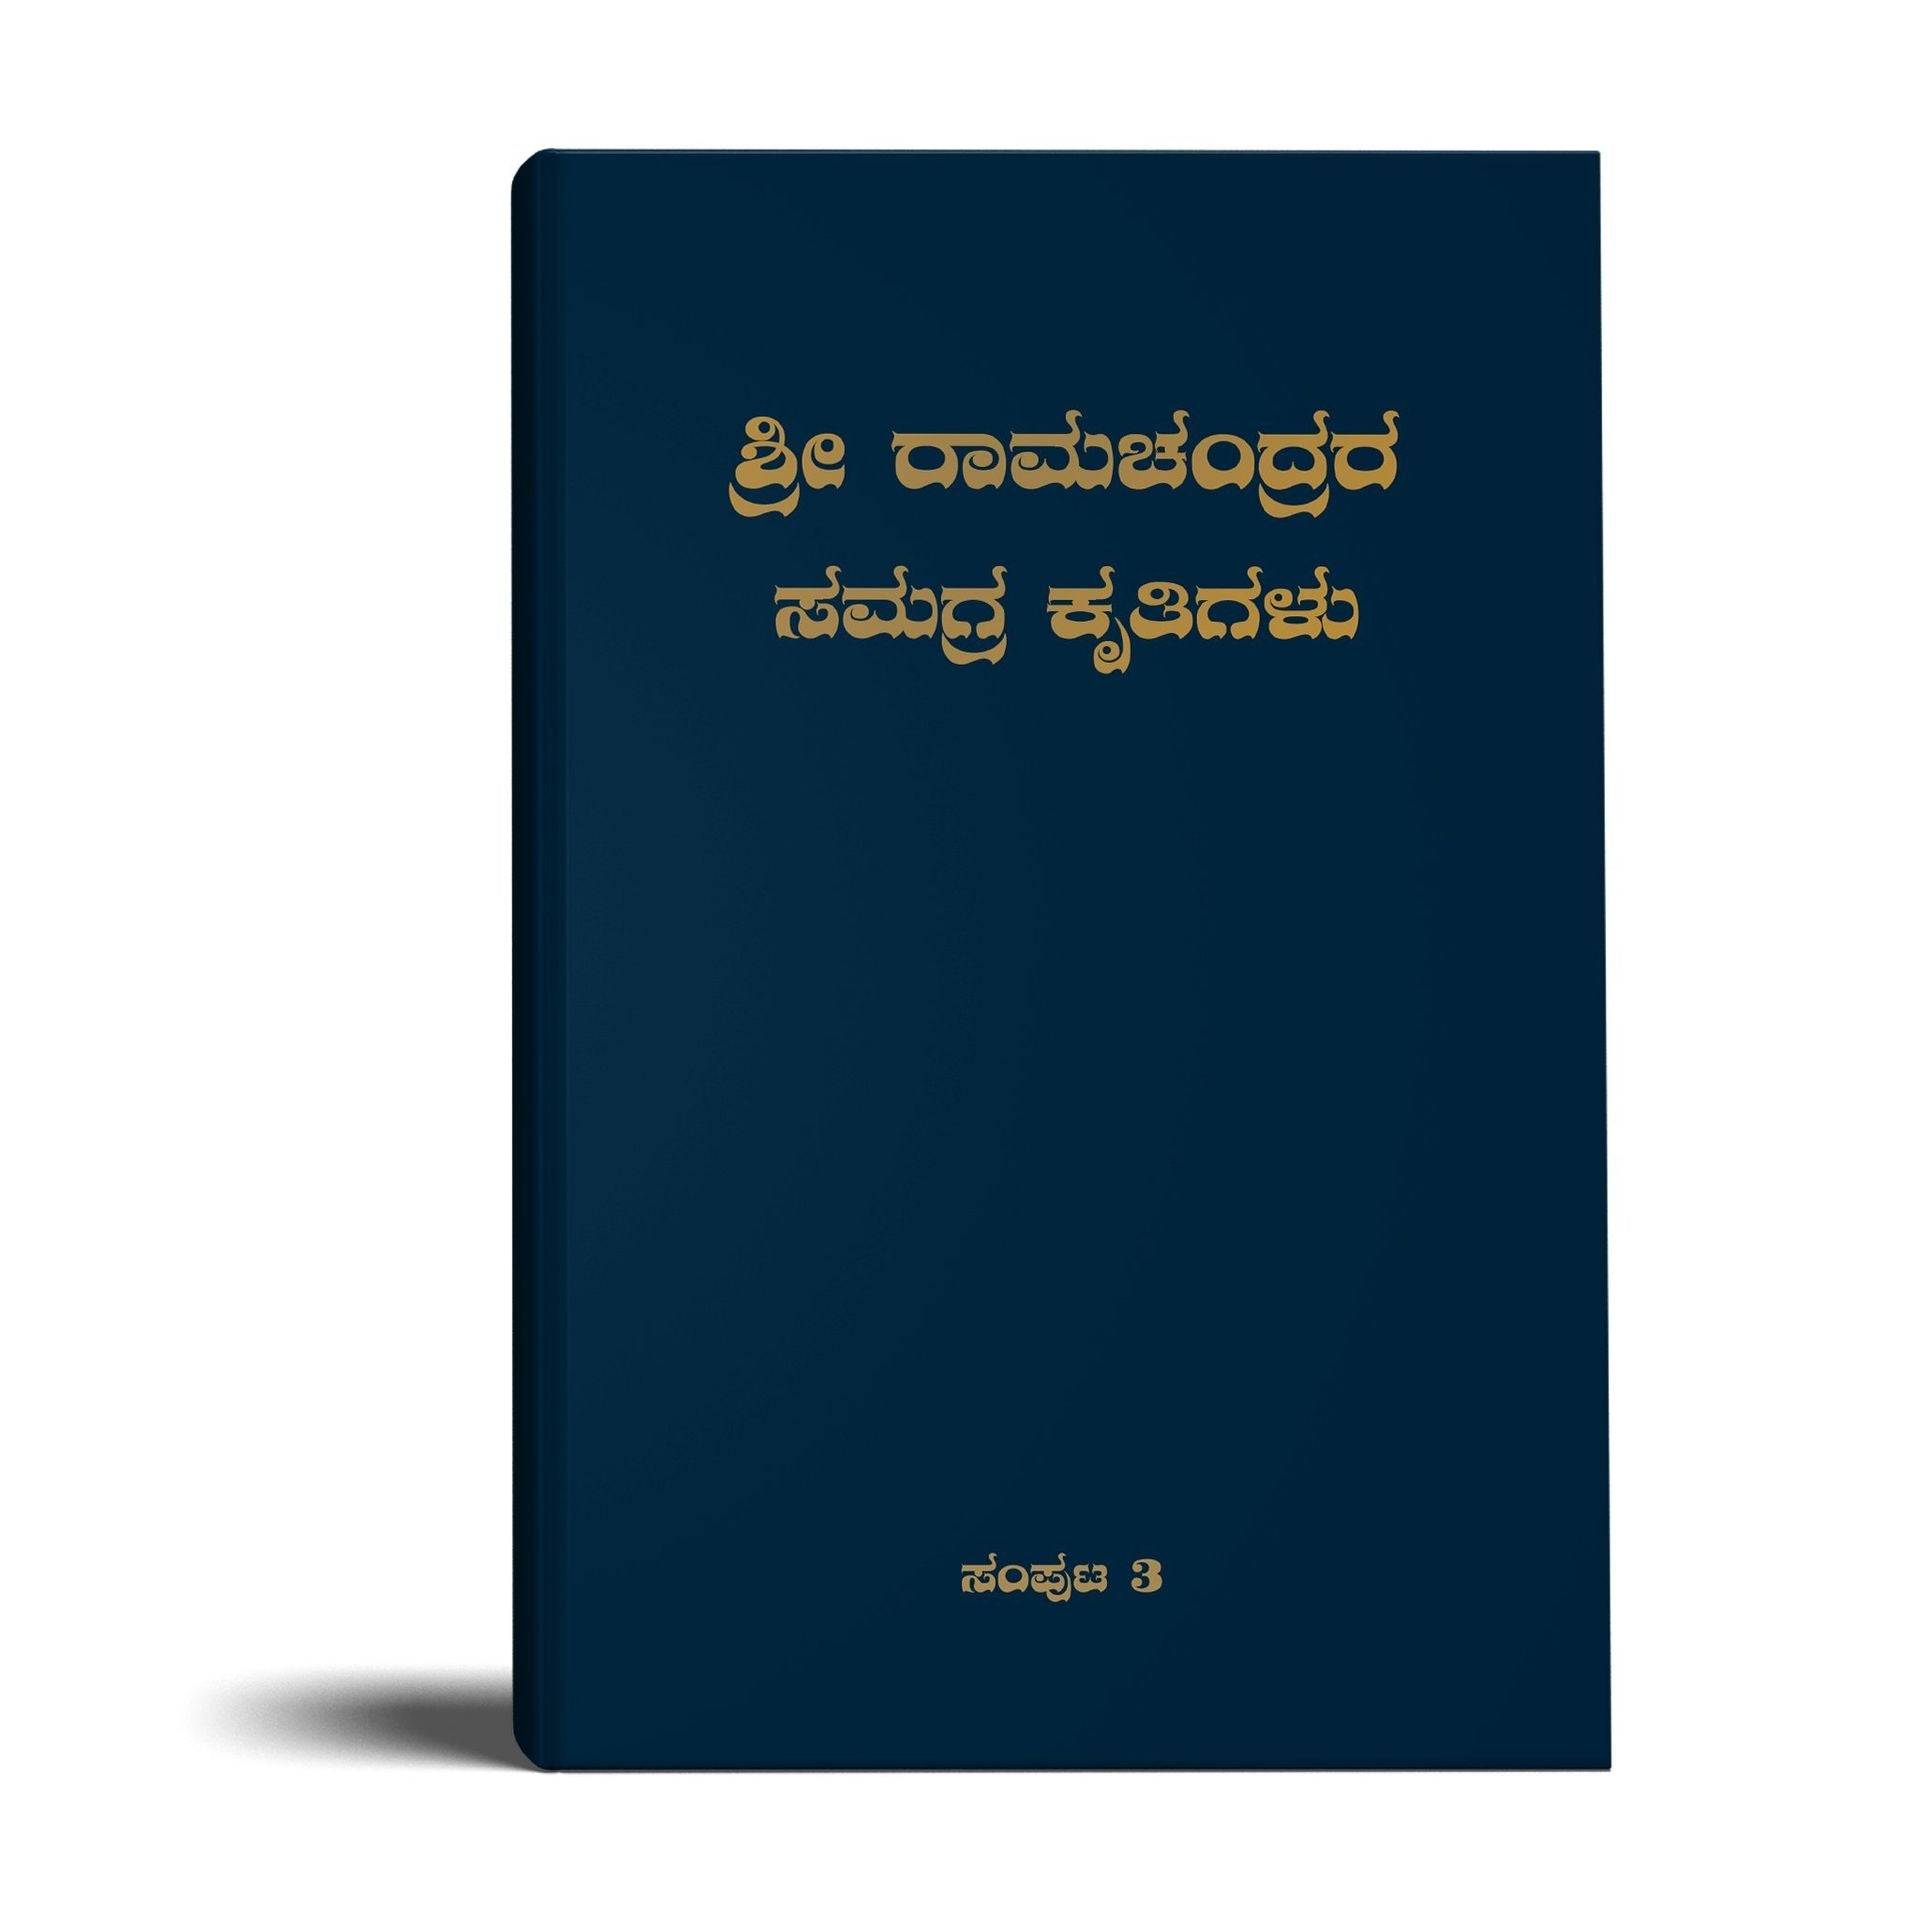 Complete Works of Ram Chandra (Babuji) - Volume 3